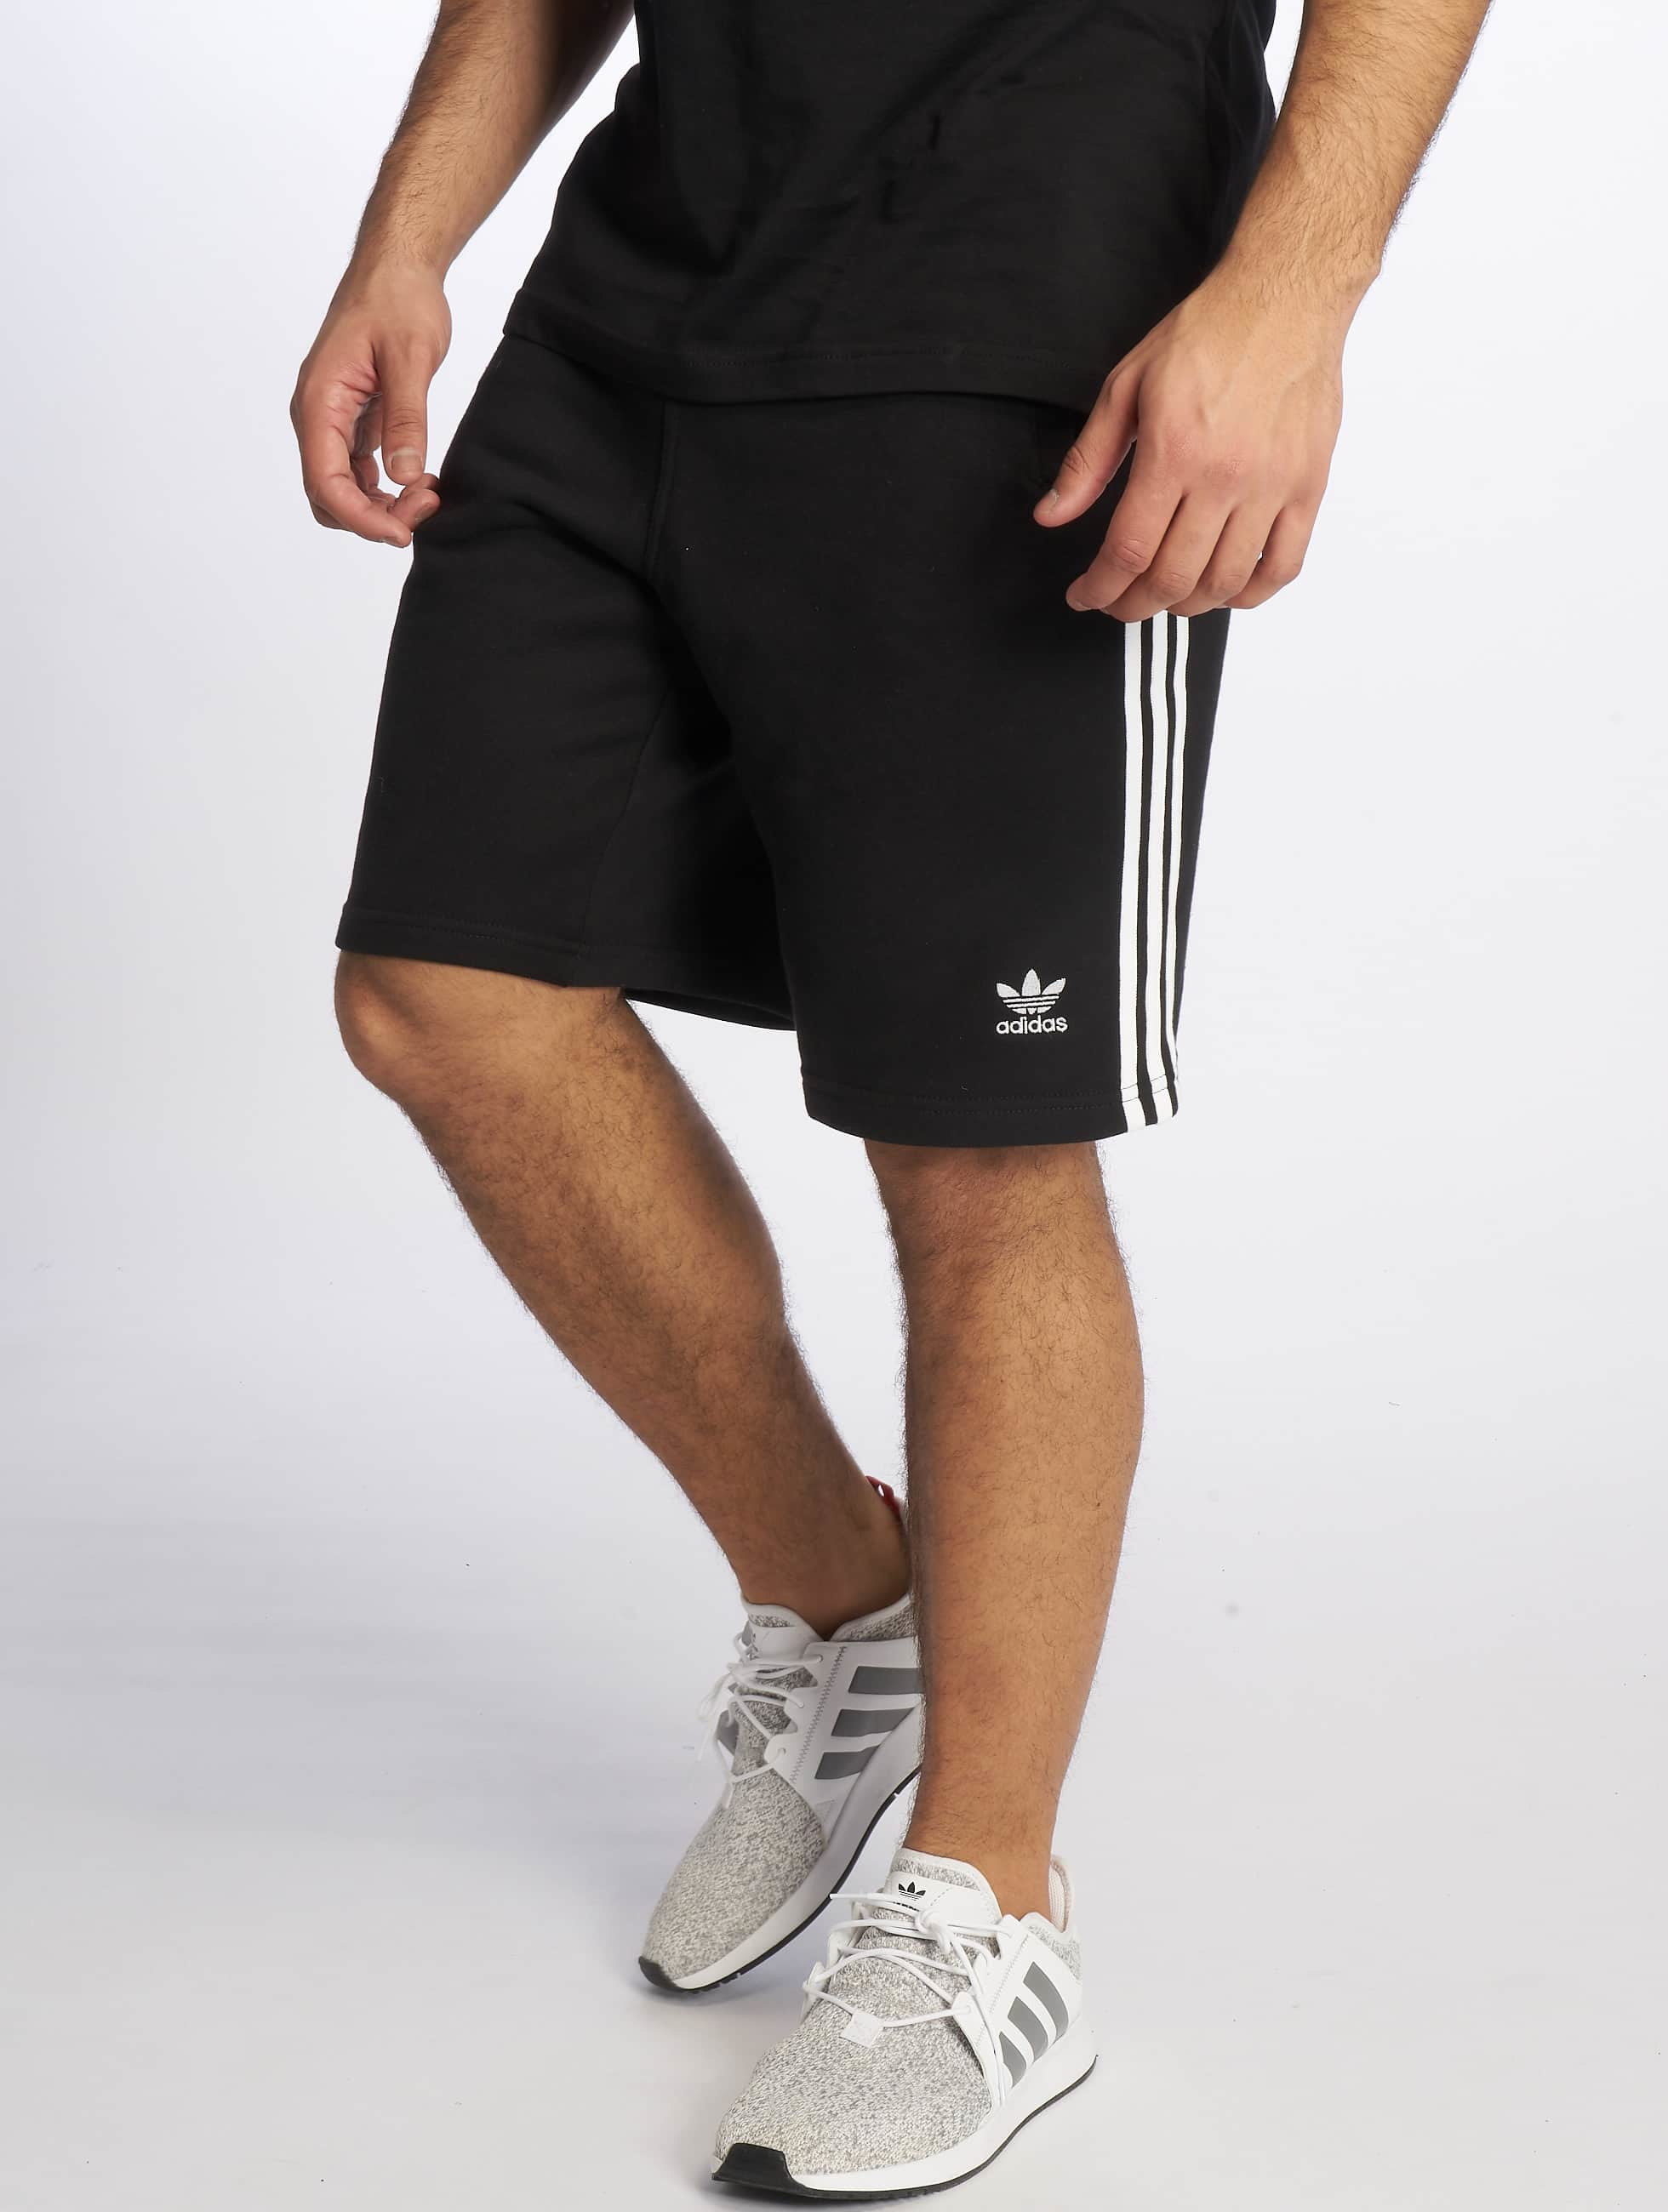 Originals Bukser / Shorts 3-Stripe sort 599292